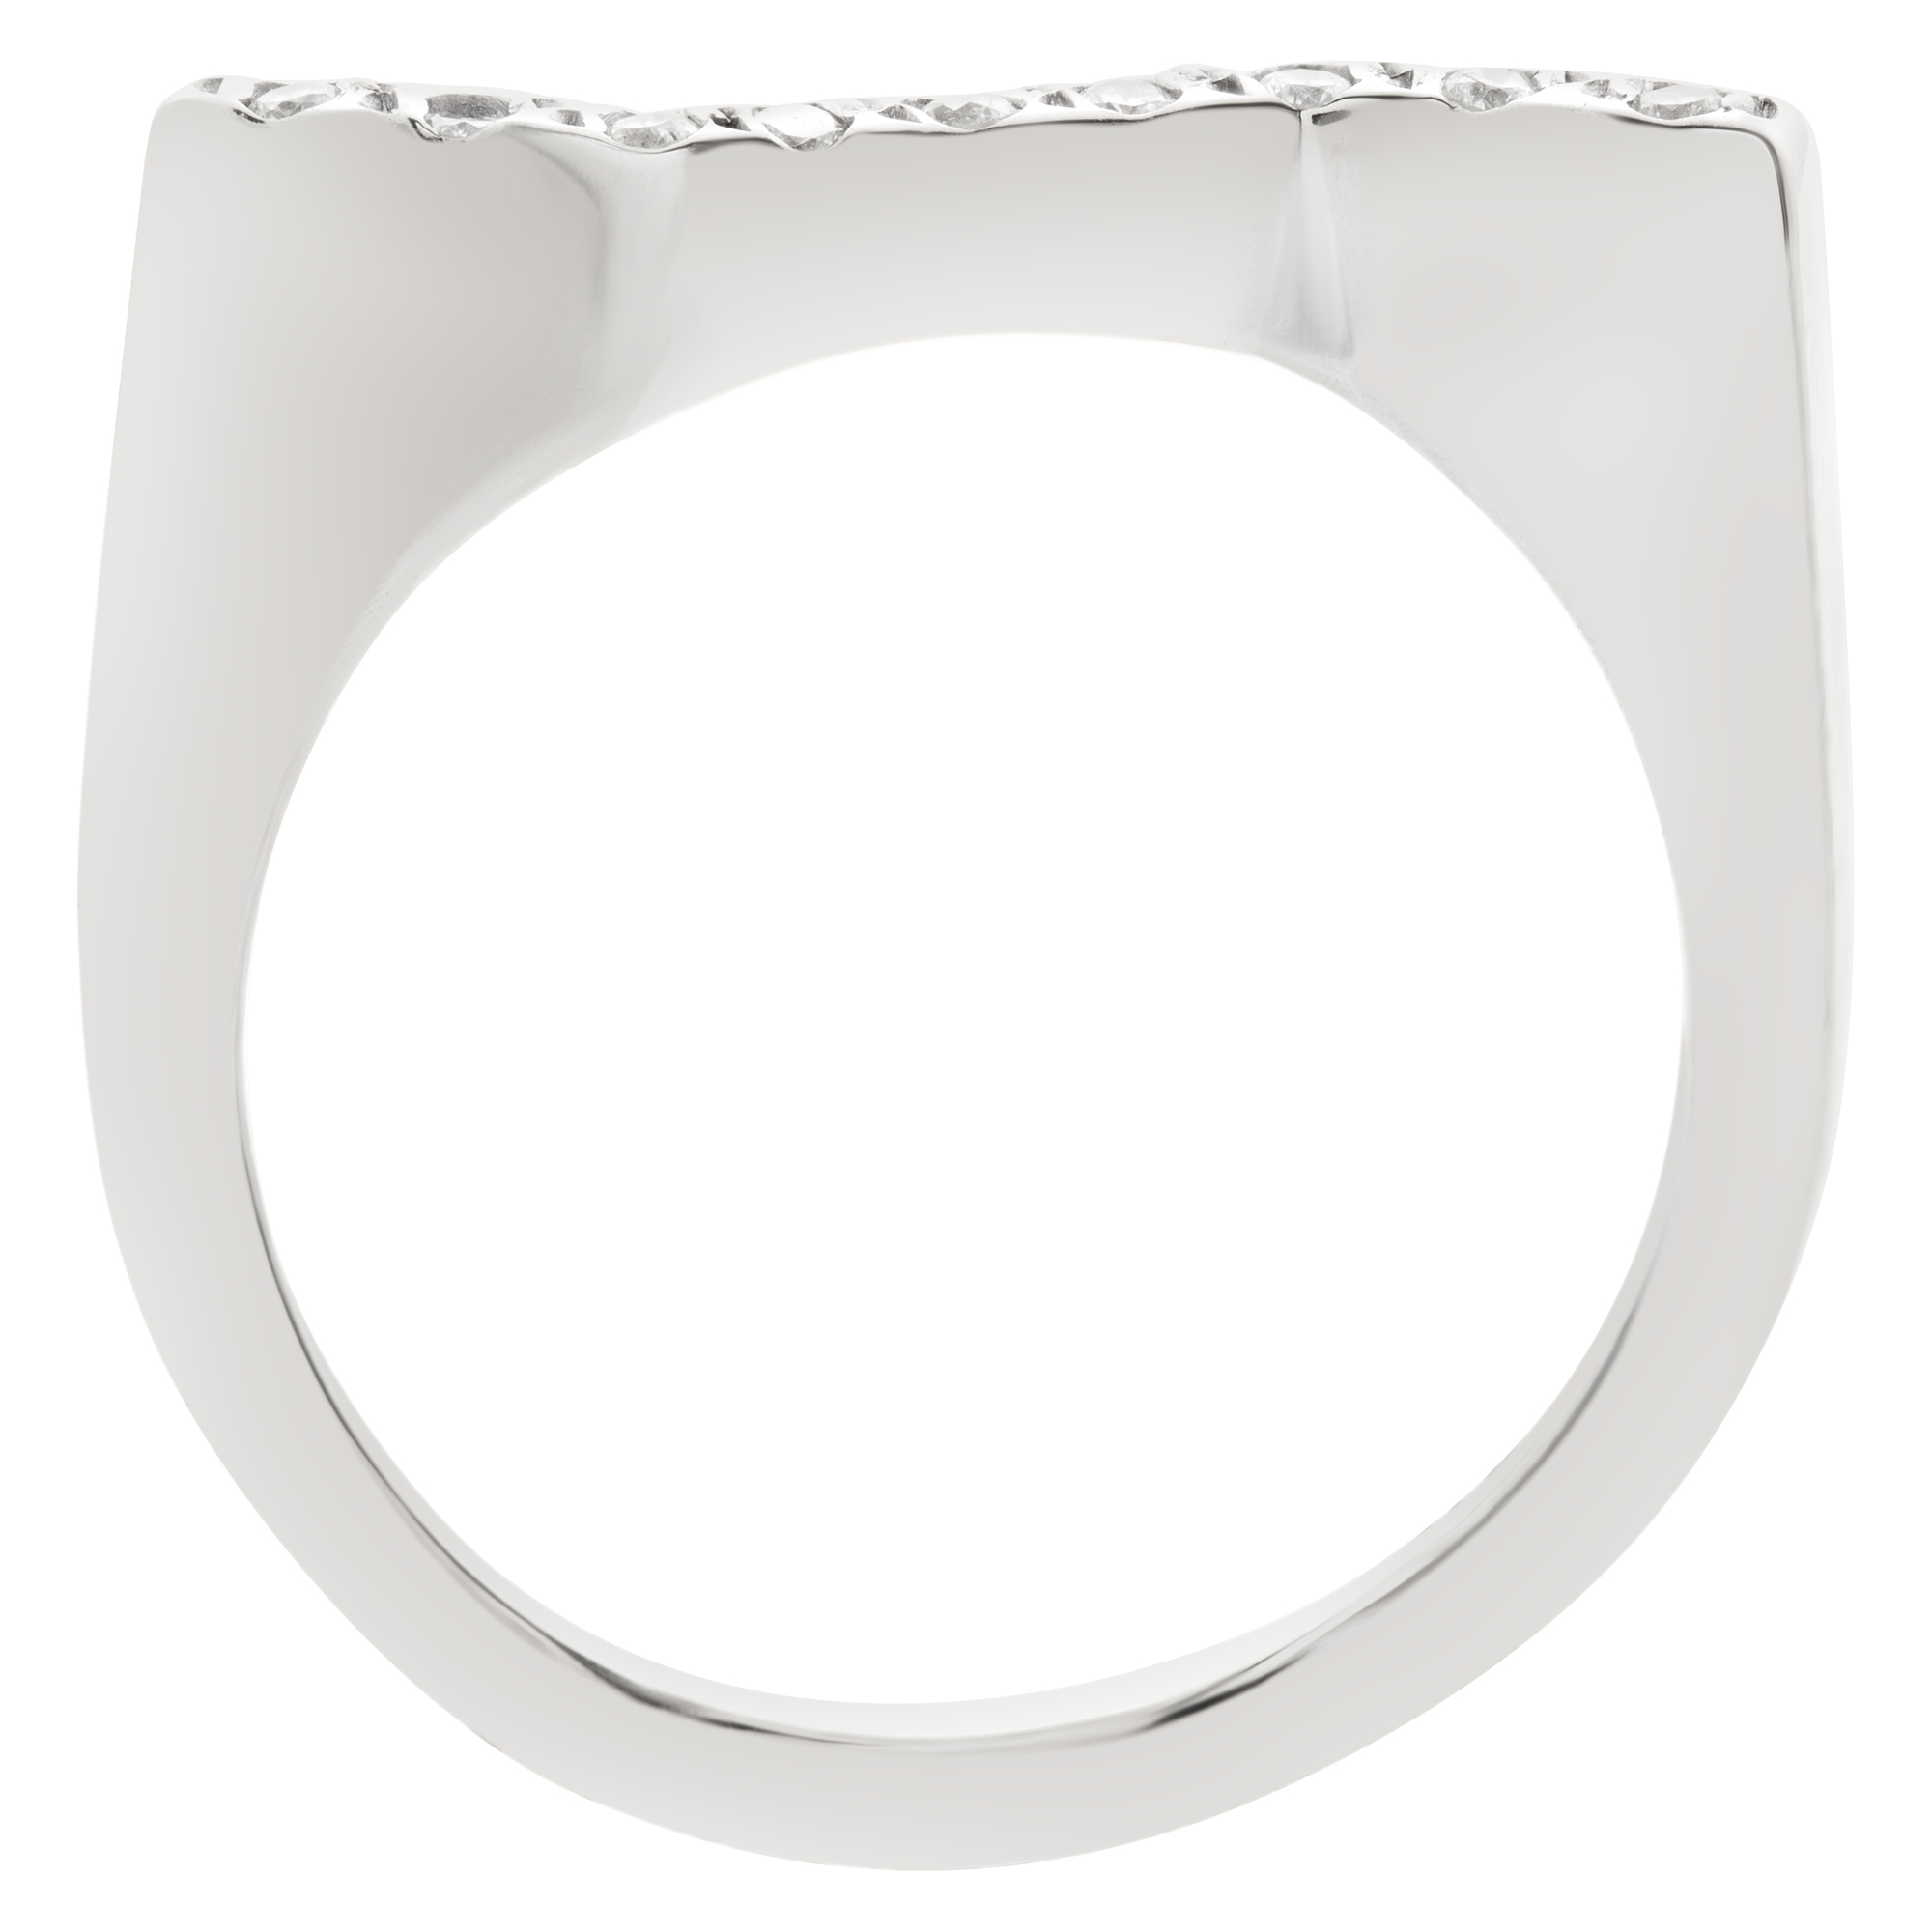 Zig-zag diamond line ring in 18k white gold, app. 0.10 carats. Size 8 image 4